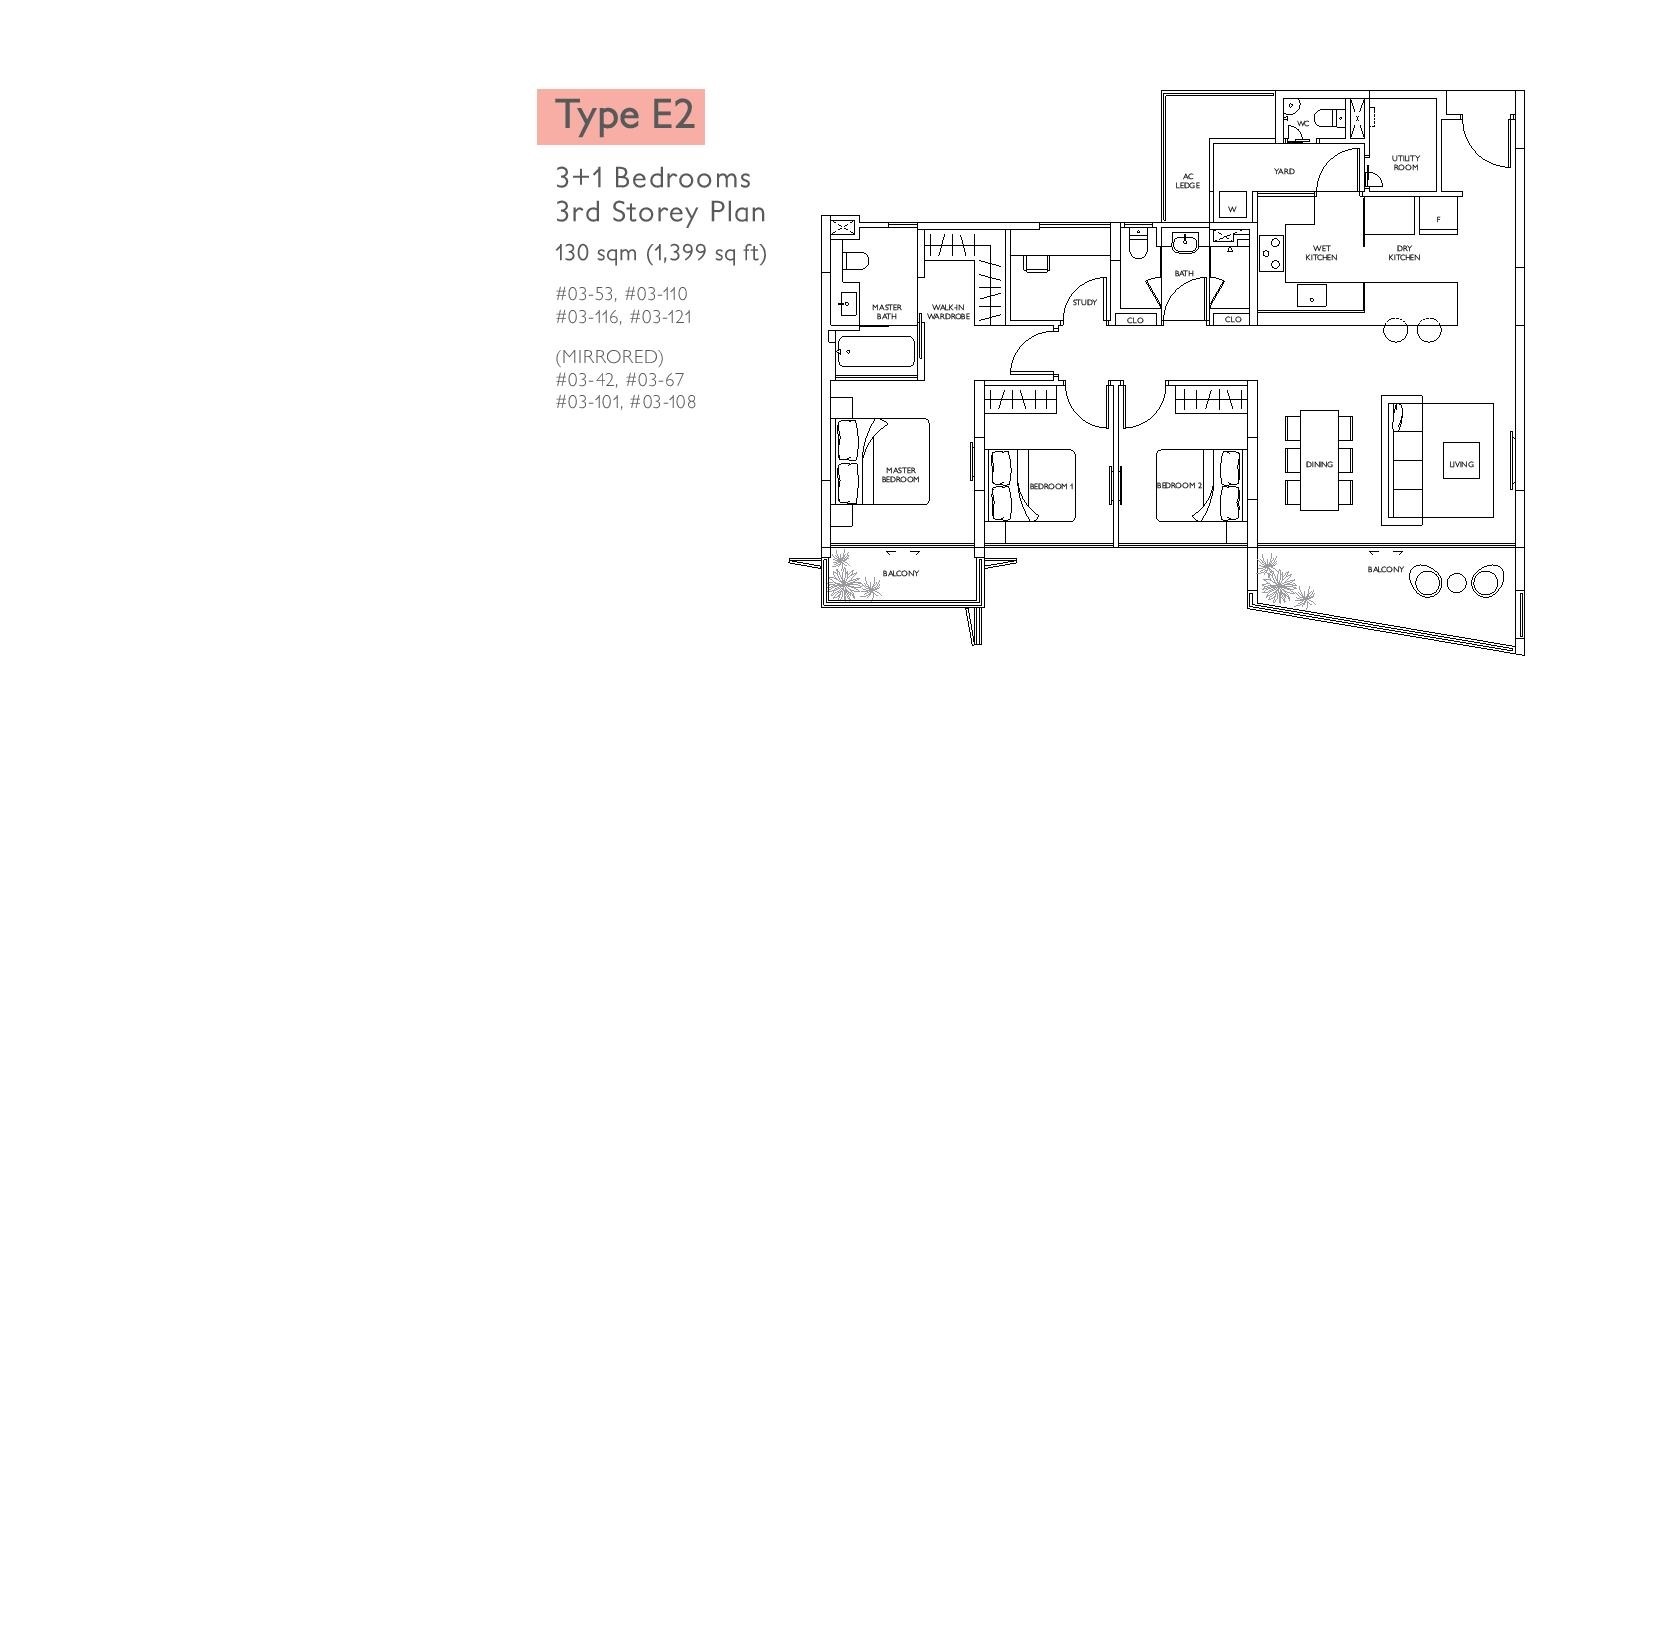 Archipelago 3 Bedroom Type E2 Floor Plans